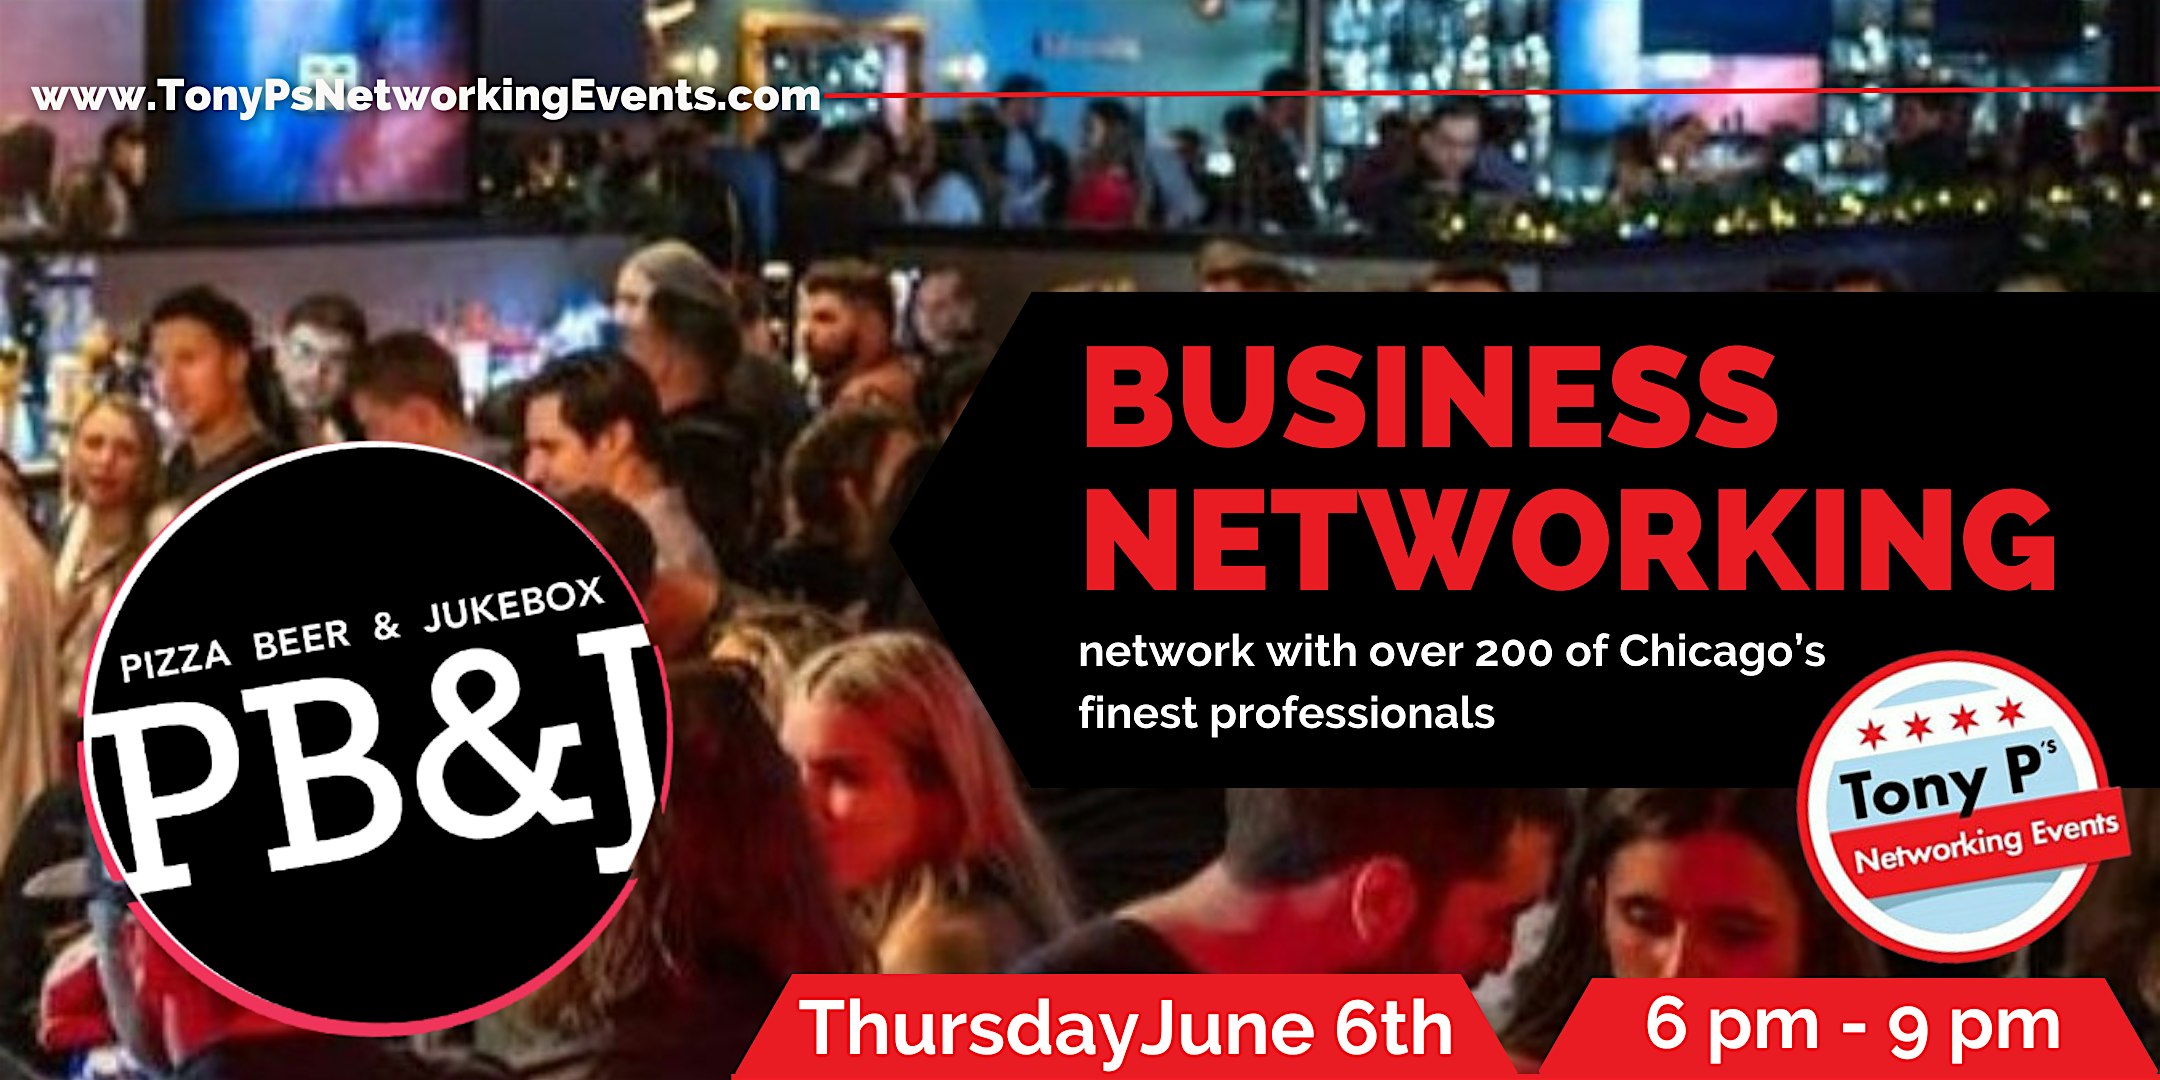 Tony P’s June Business Networking Event @ PB & J’s patio: Thursday June 6th